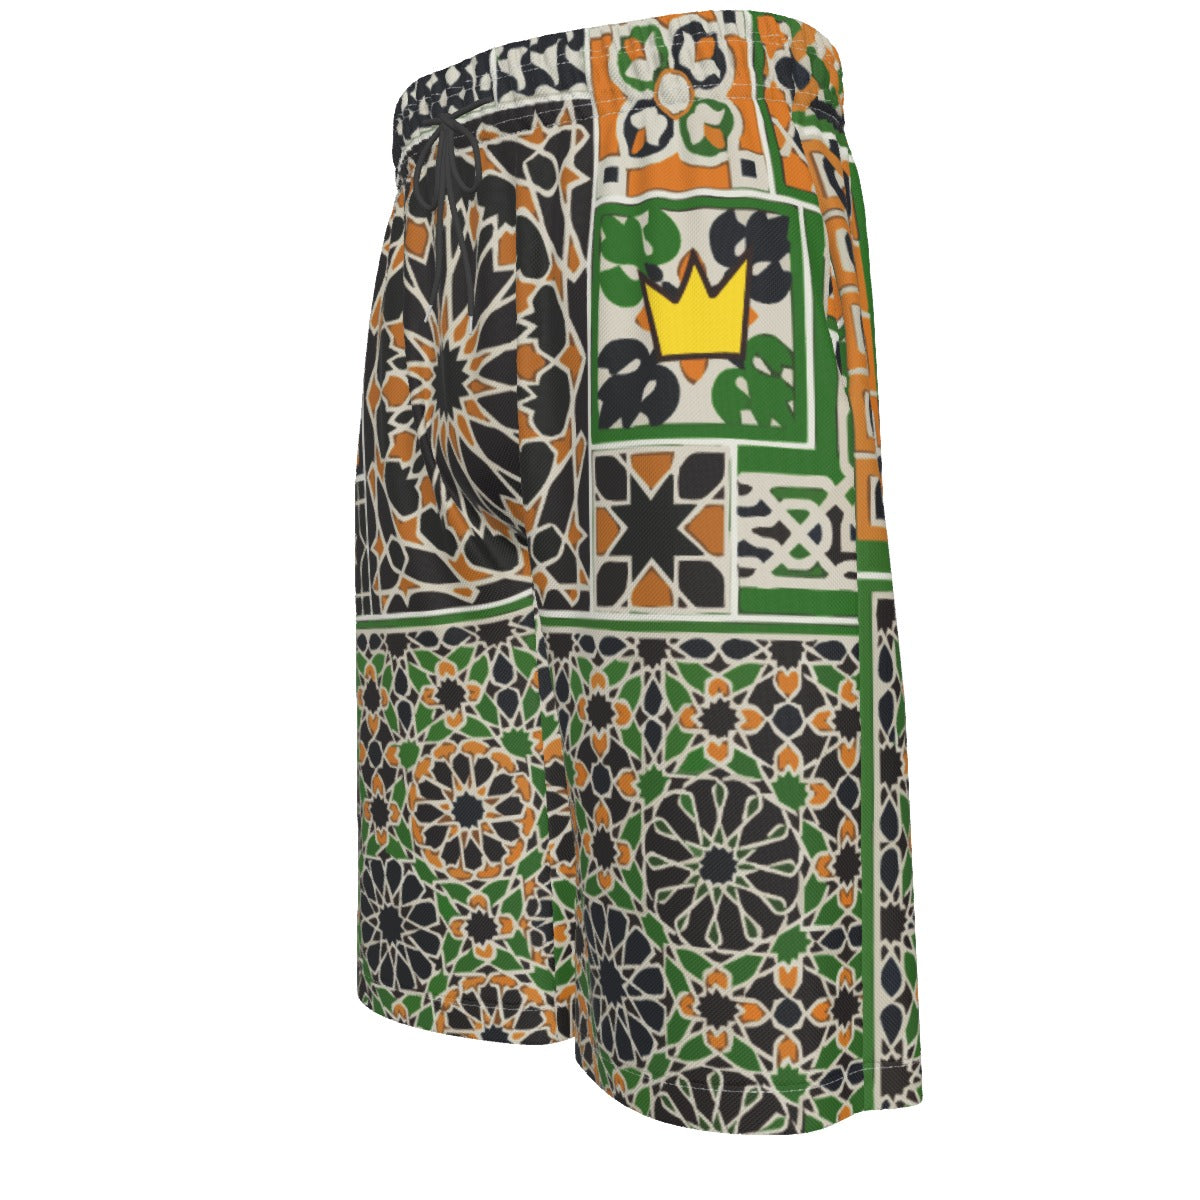 Tribal Men's Shorts- Congo